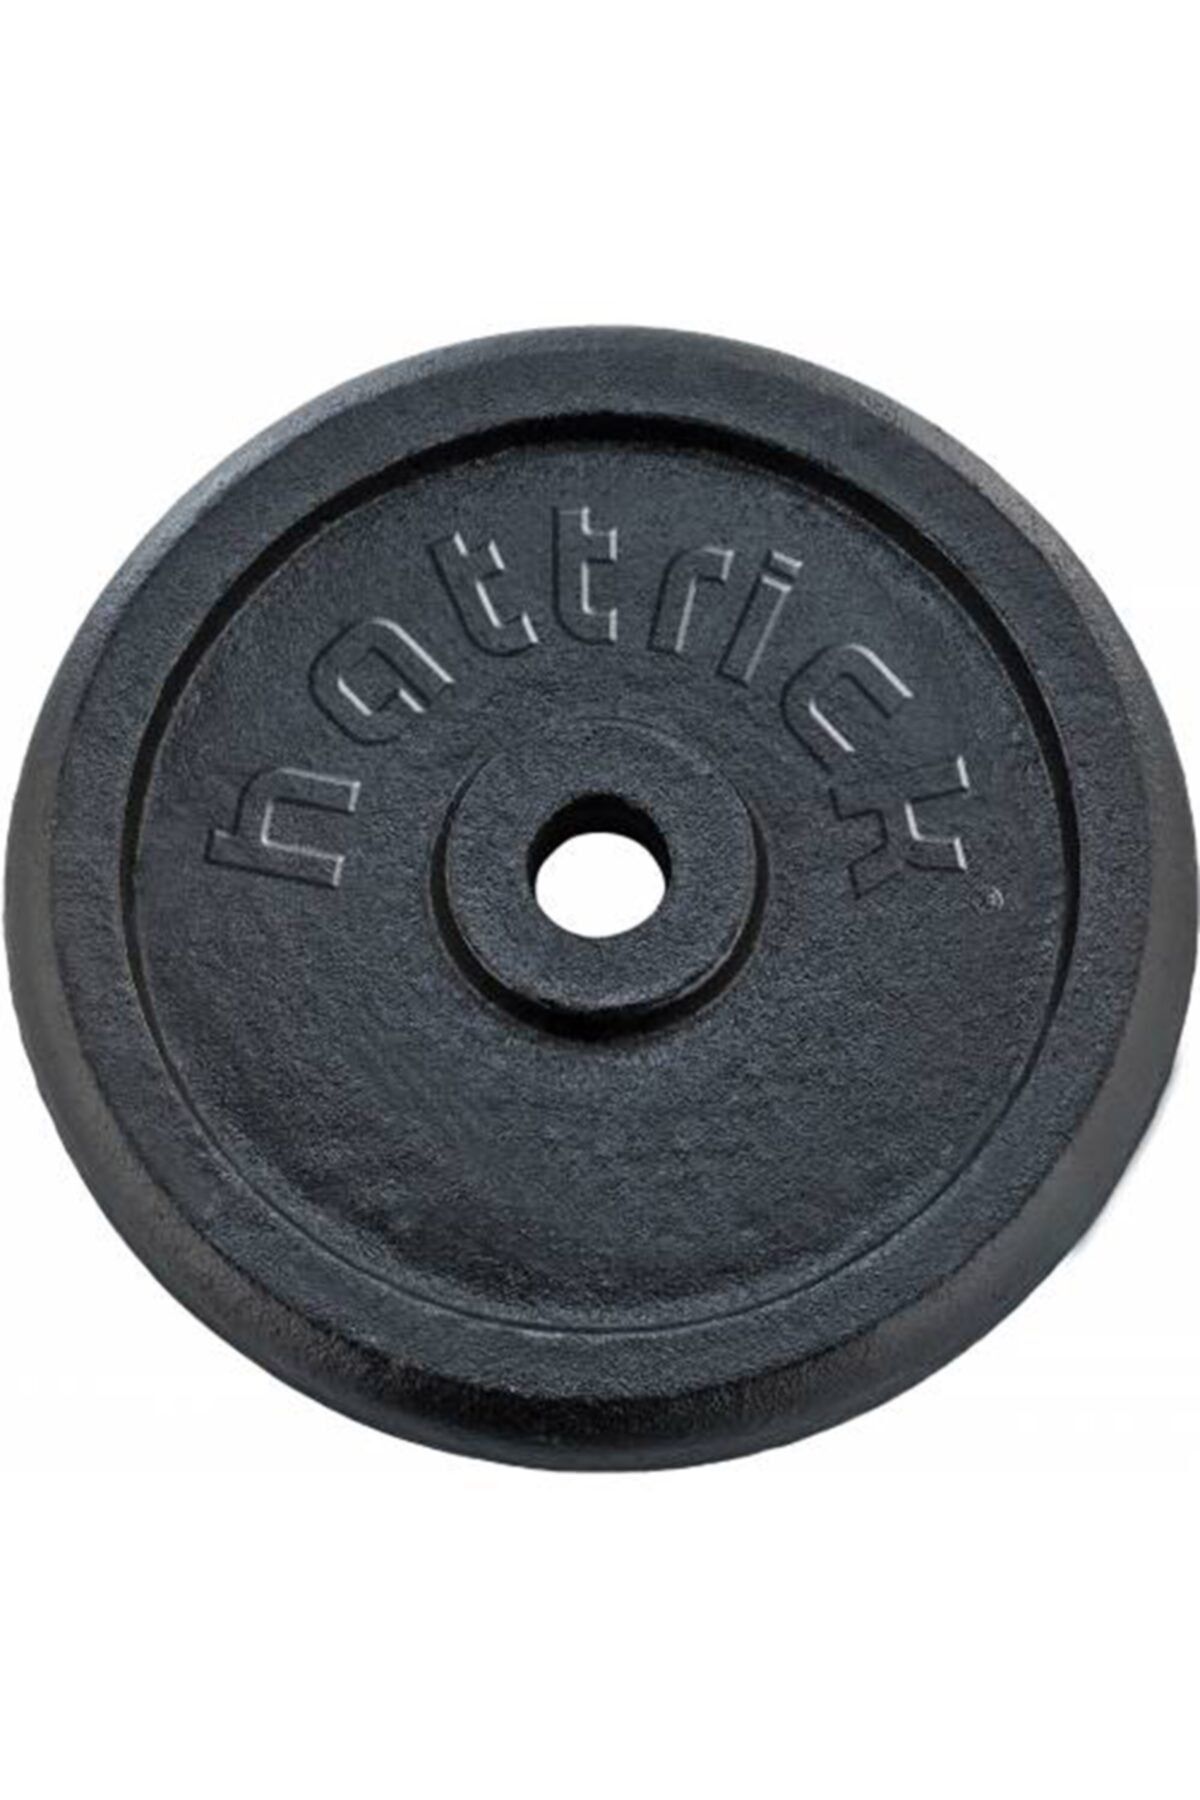 Hattrick Döküm Flanş Plaka (sdh-3) 3 kg